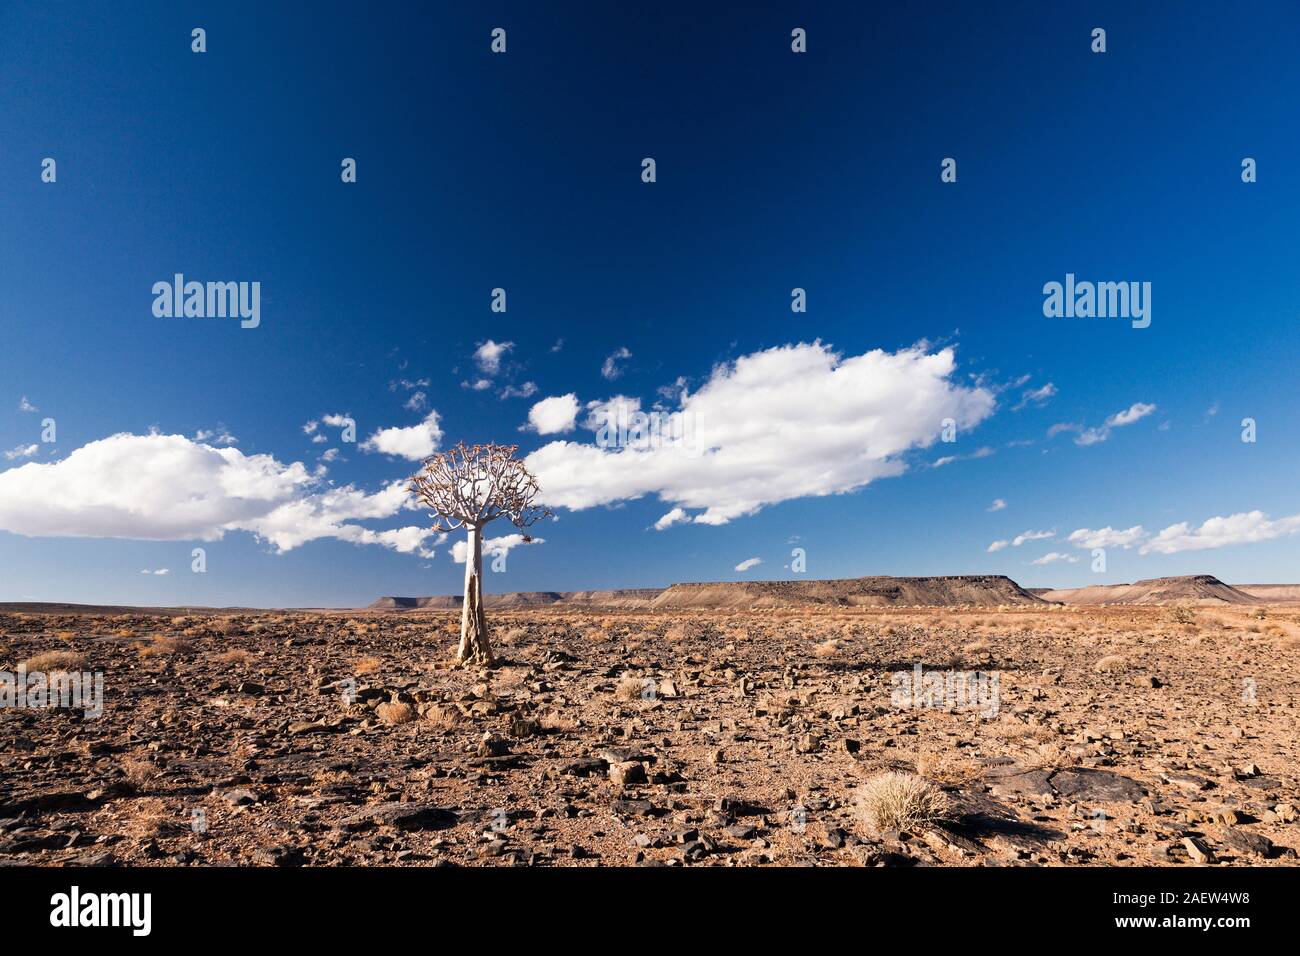 Lonely Qiver Tree, Aloe dichotoma, kokerboom, gravel desert, near Grunau, Karas Region, Namibia, Southern Africa, Africa Stock Photo